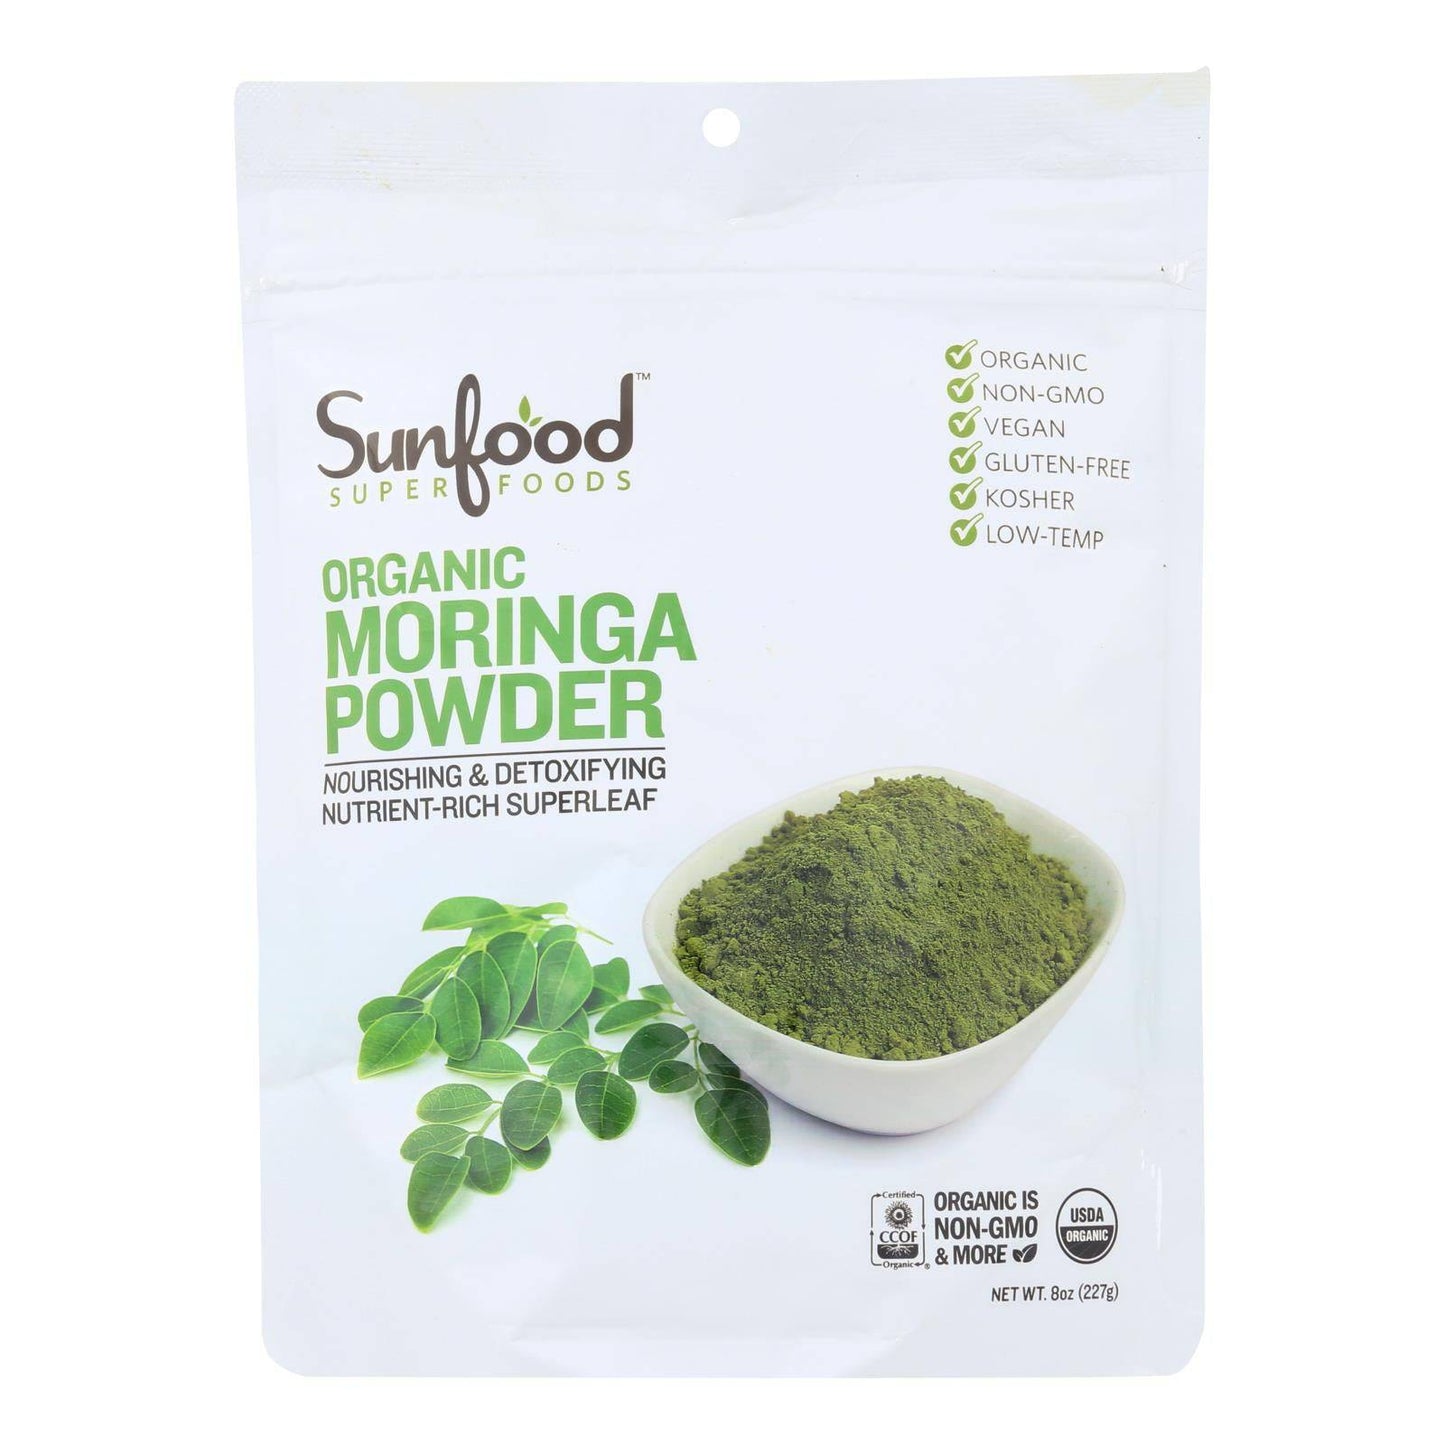 Buy Sunfood Superfoods Organic Moringa Powder - 1 Each - 8 Oz  at OnlyNaturals.us